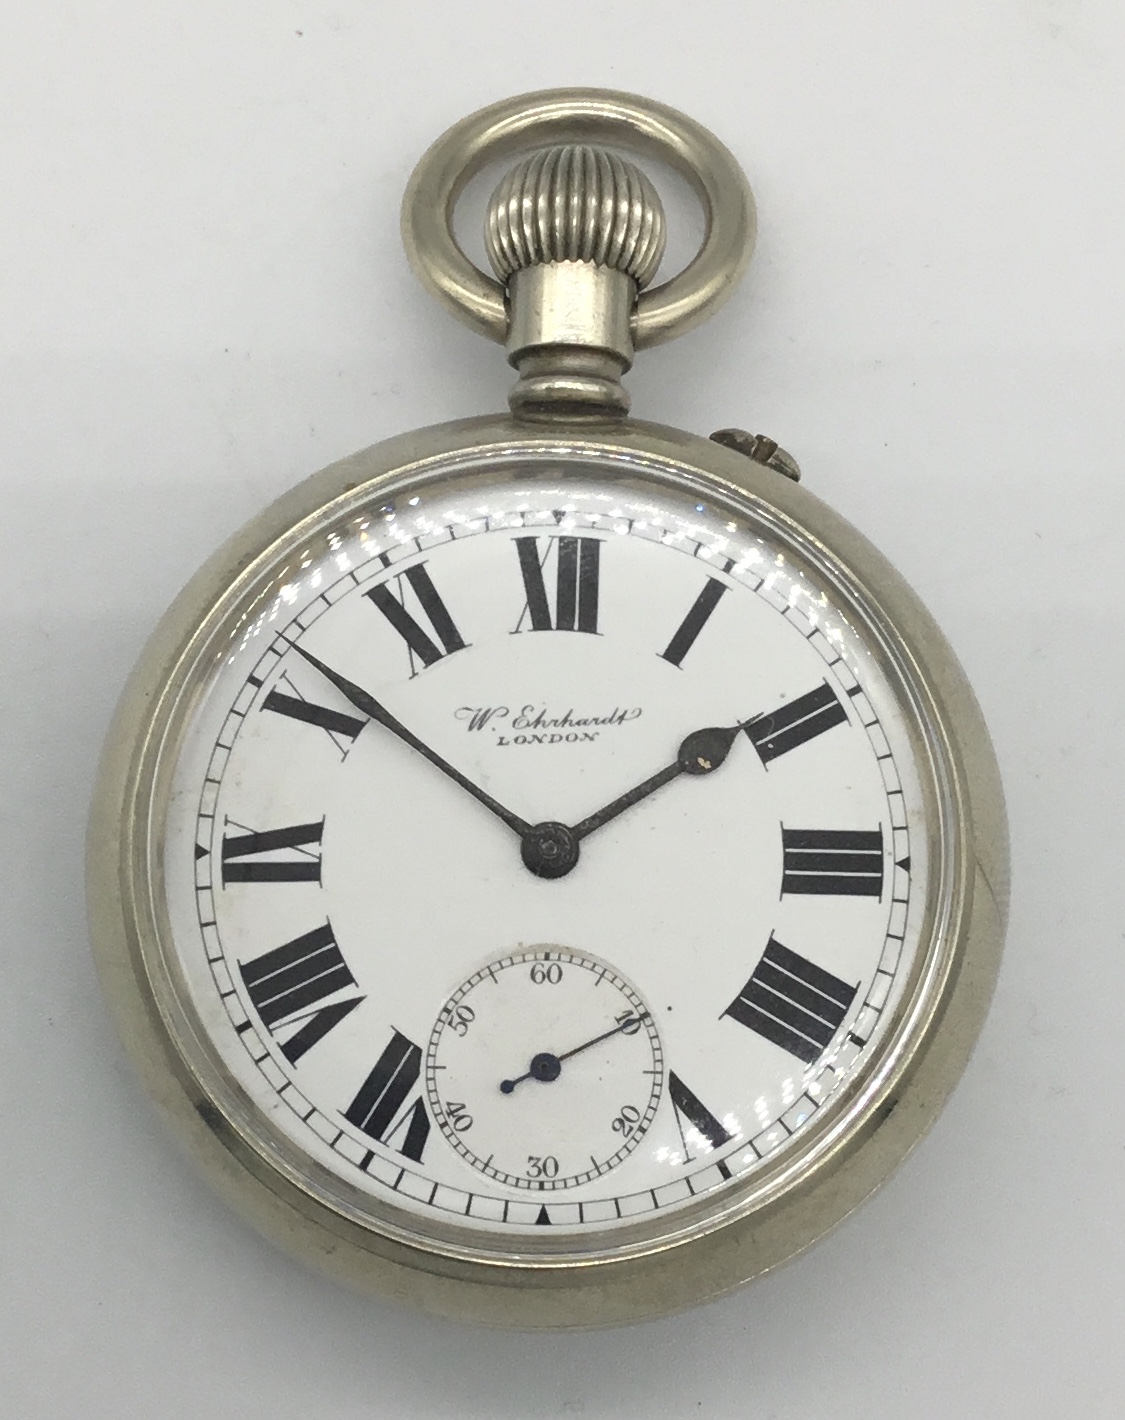 A scarce WW1 era, military D series pocket watch by W.Ehrhardt. Nickel screw back case, marked